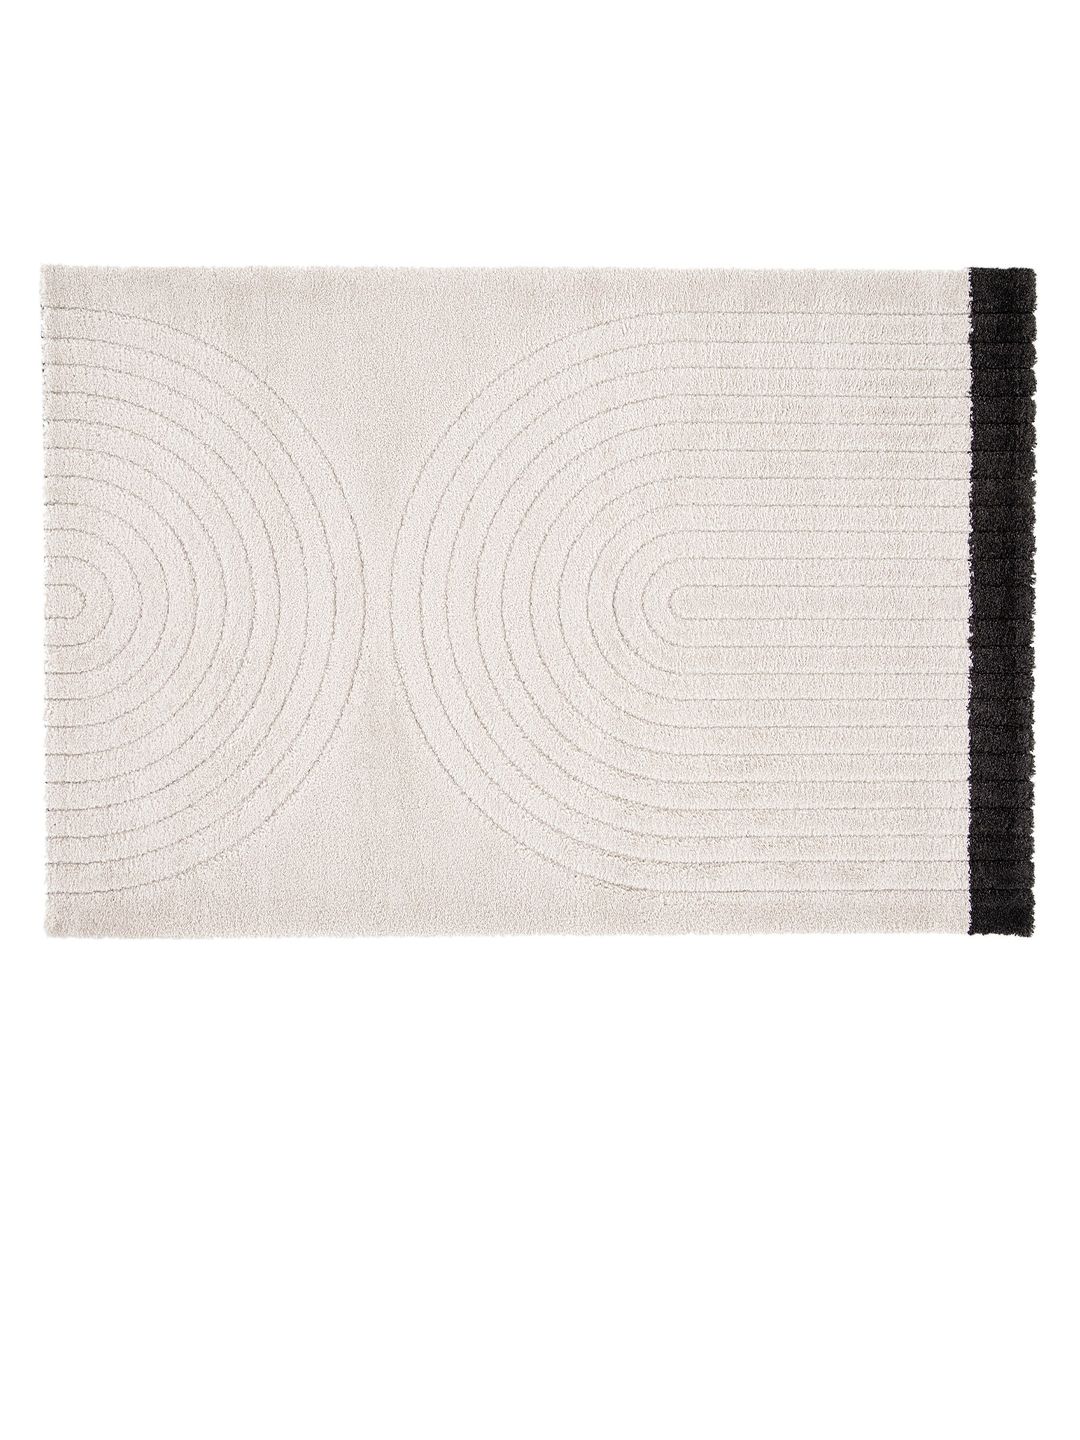 DDecor Off White & Black Geometric Printed Carpets Price in India